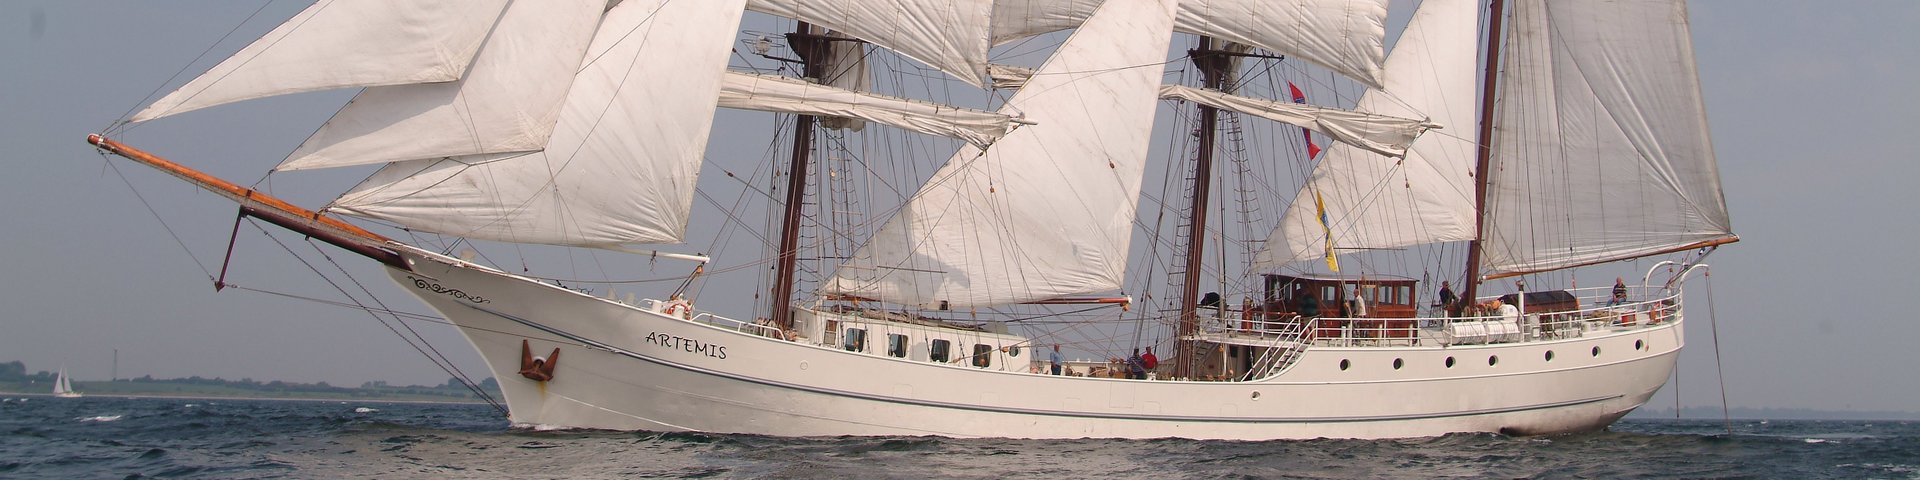 Segelschiff Artemis unter Segeln